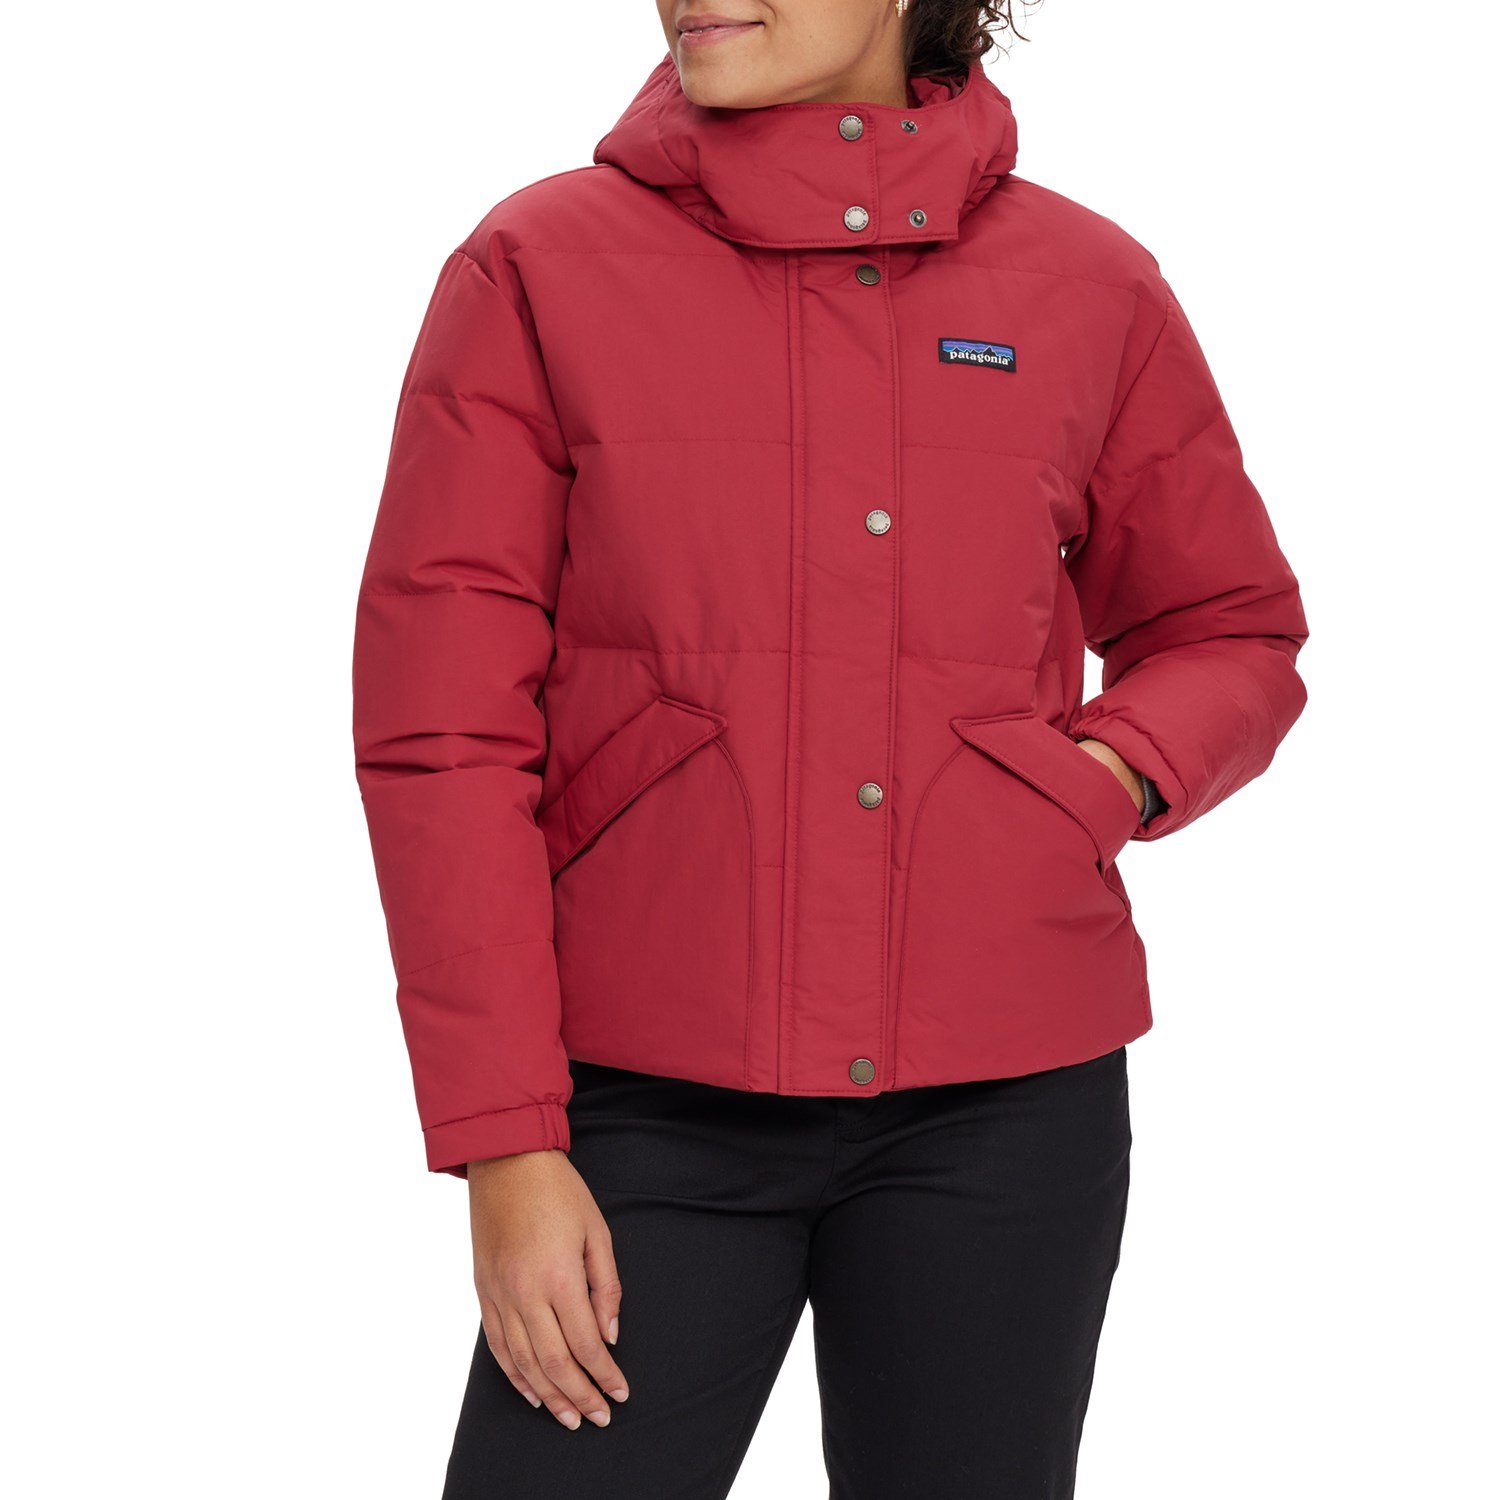 https://images.evo.com/imgp/zoom/212550/981433/patagonia-downdrift-jacket-women-s-s.jpg